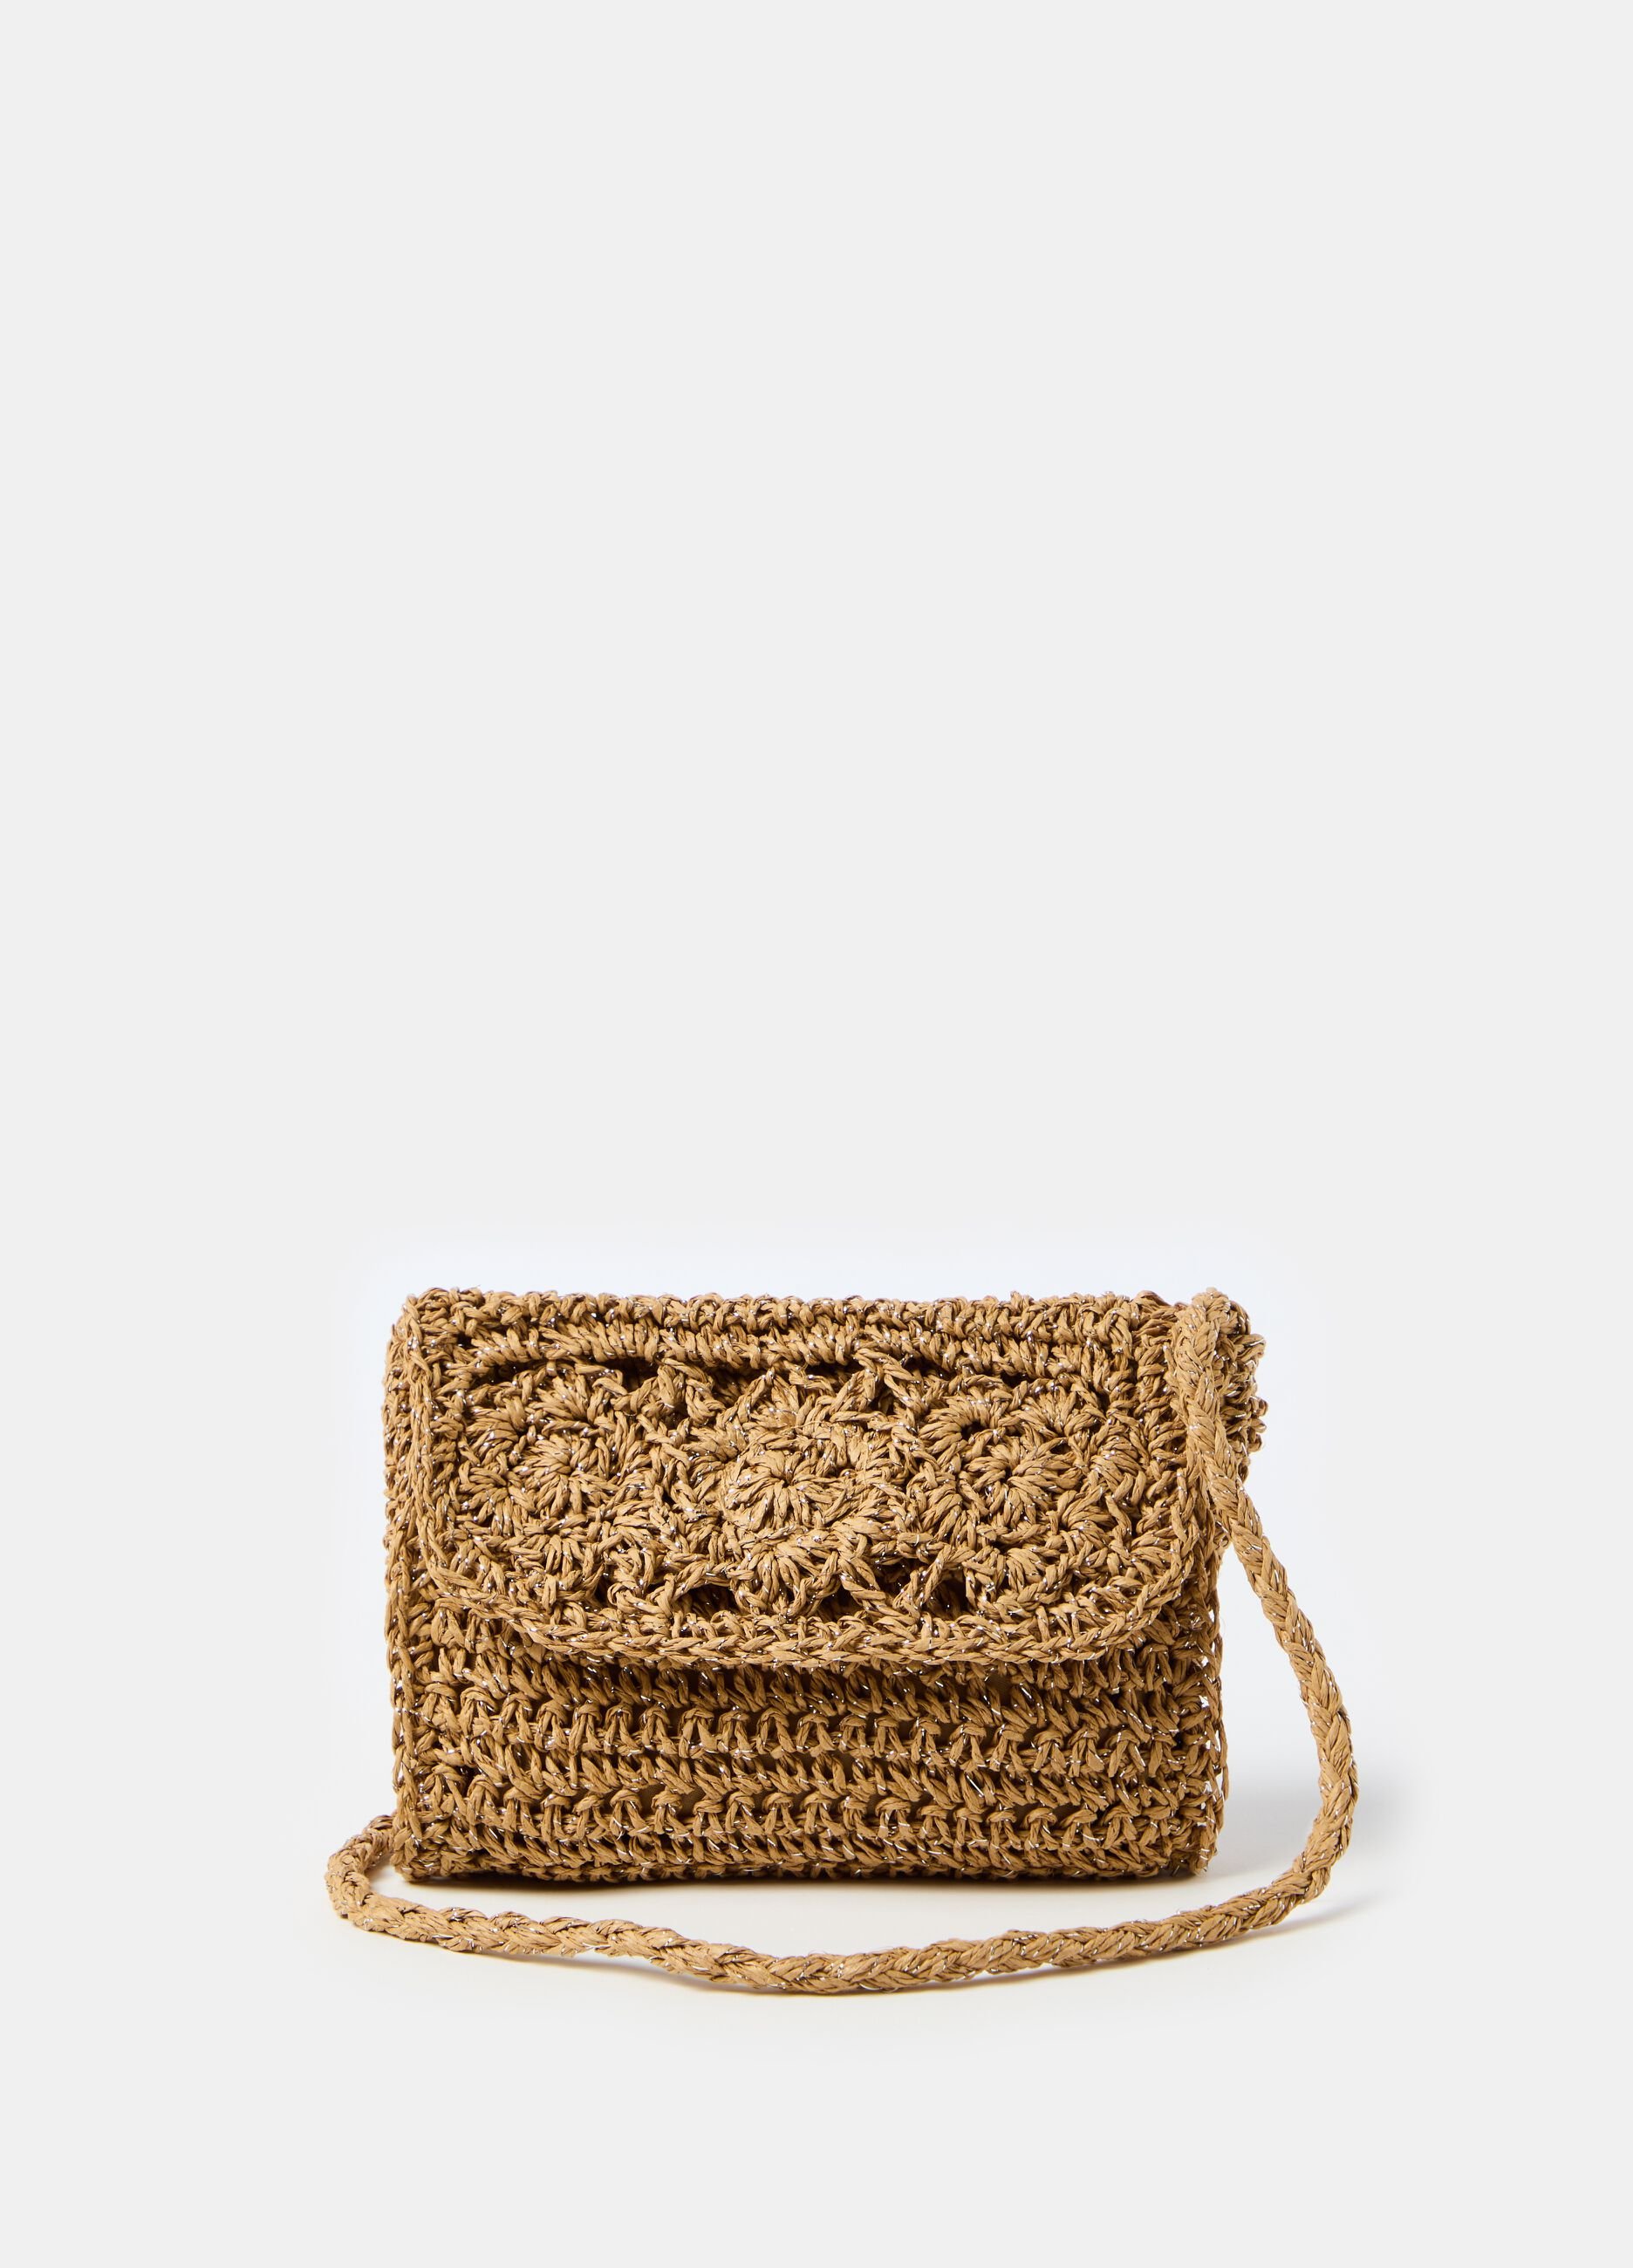 Raffia bag with crochet design